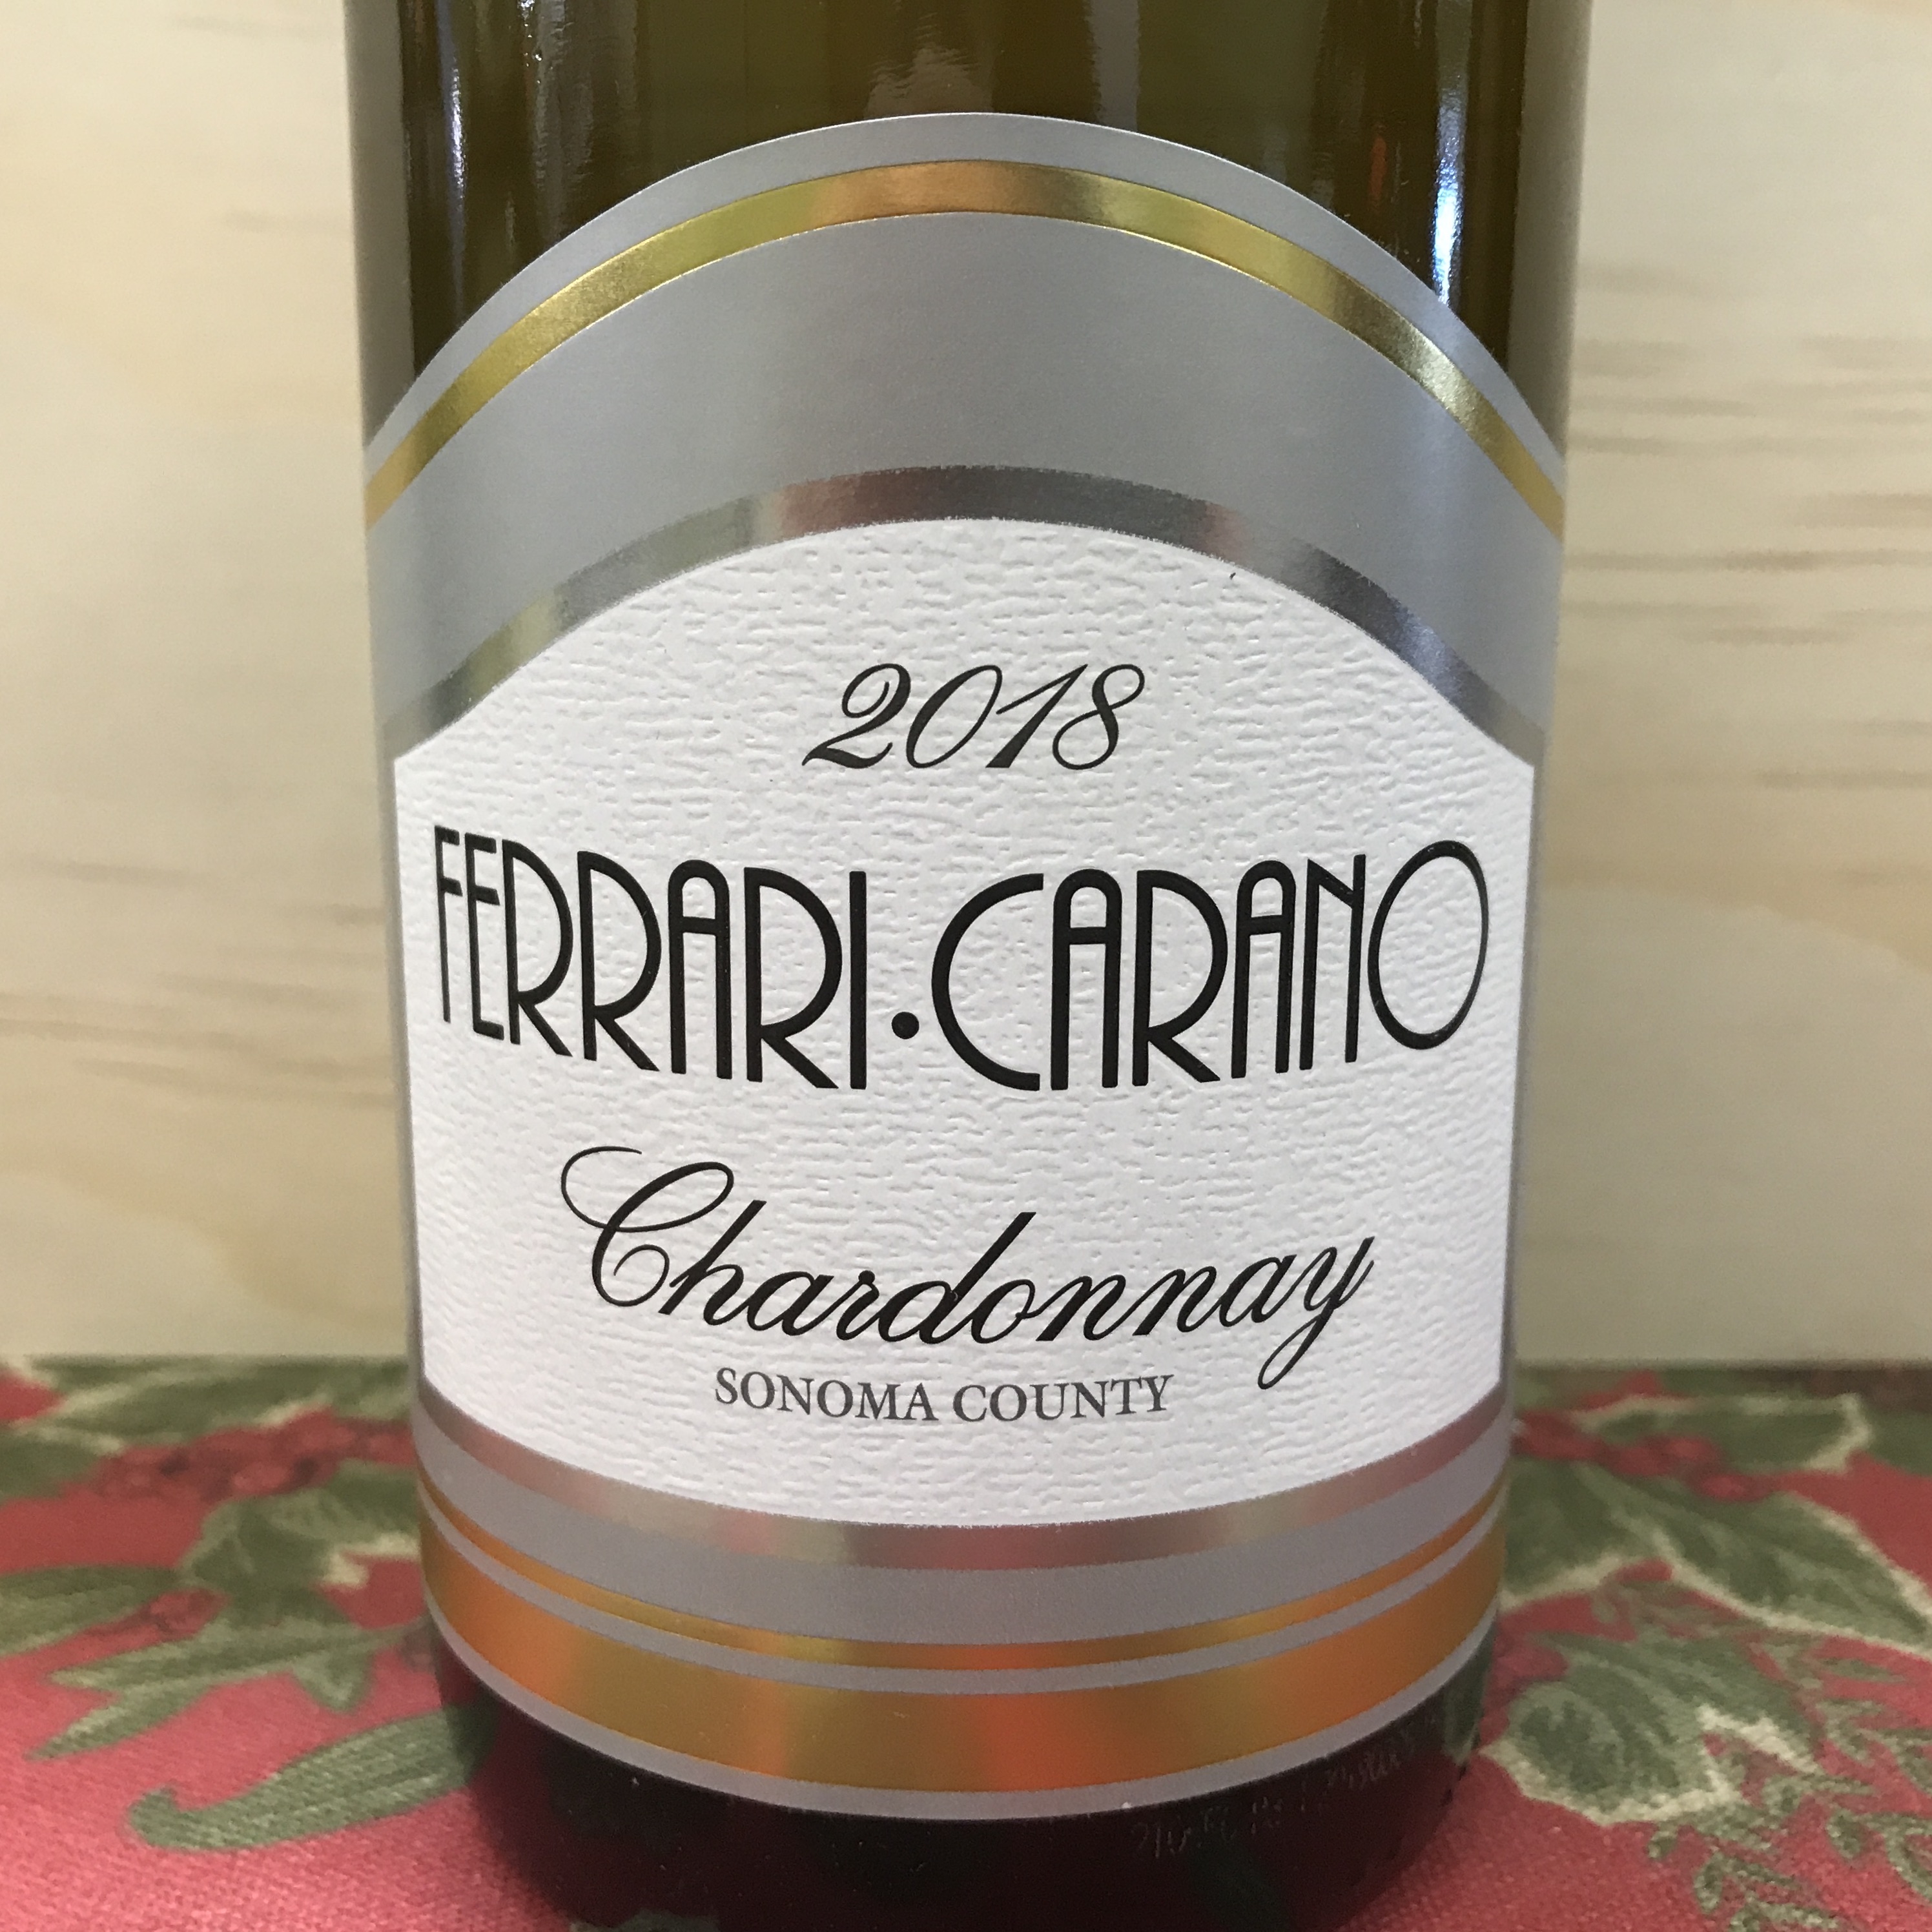 Ferrari-Carano Chardonnay Sonoma County 2018